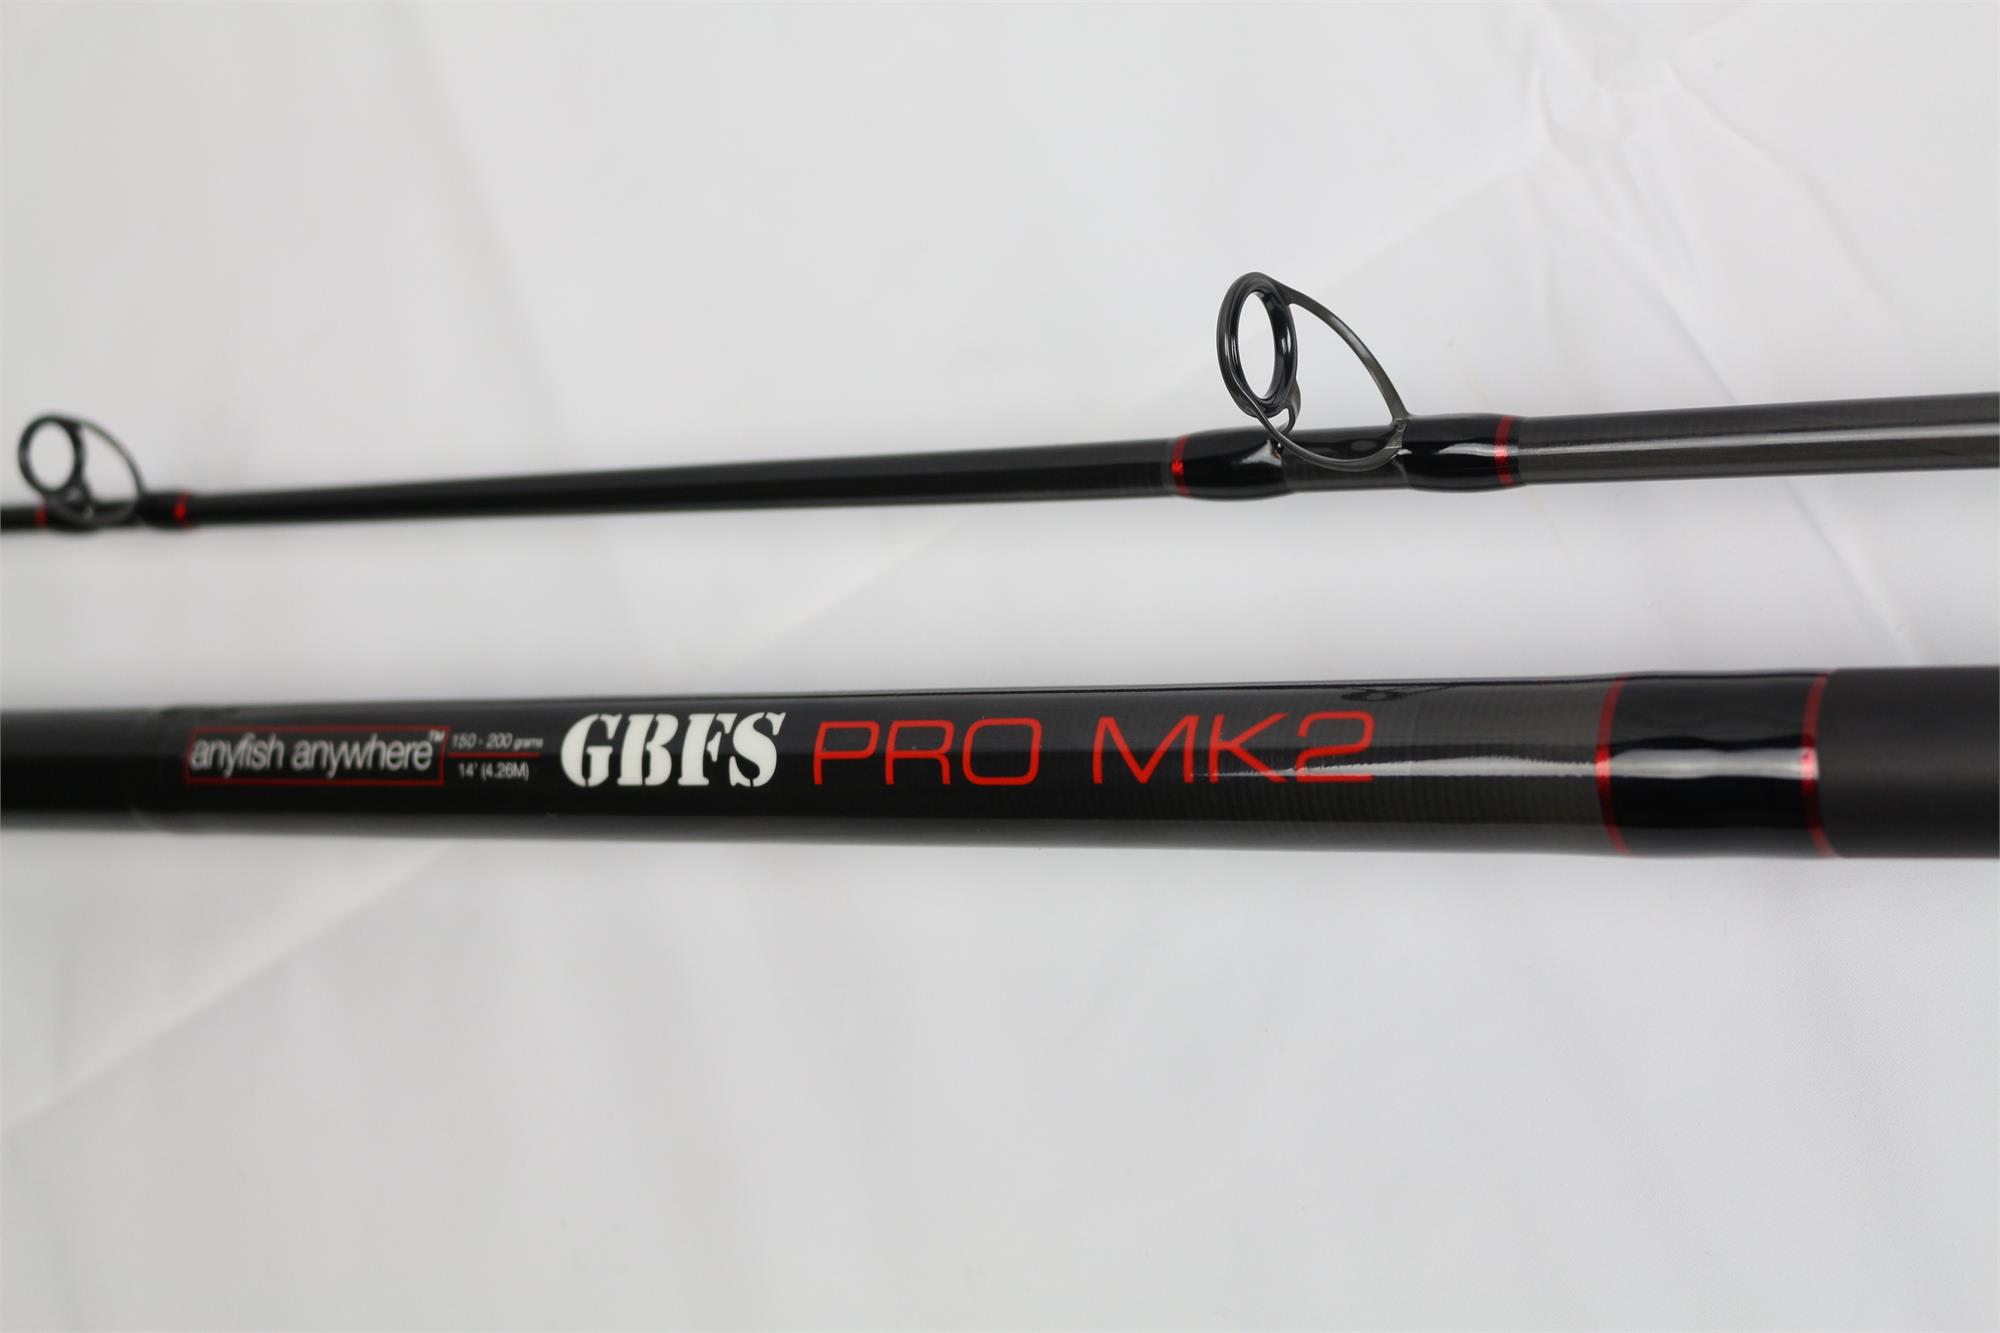 Anyfish Anywhere Bass Pro Mk1 Rod